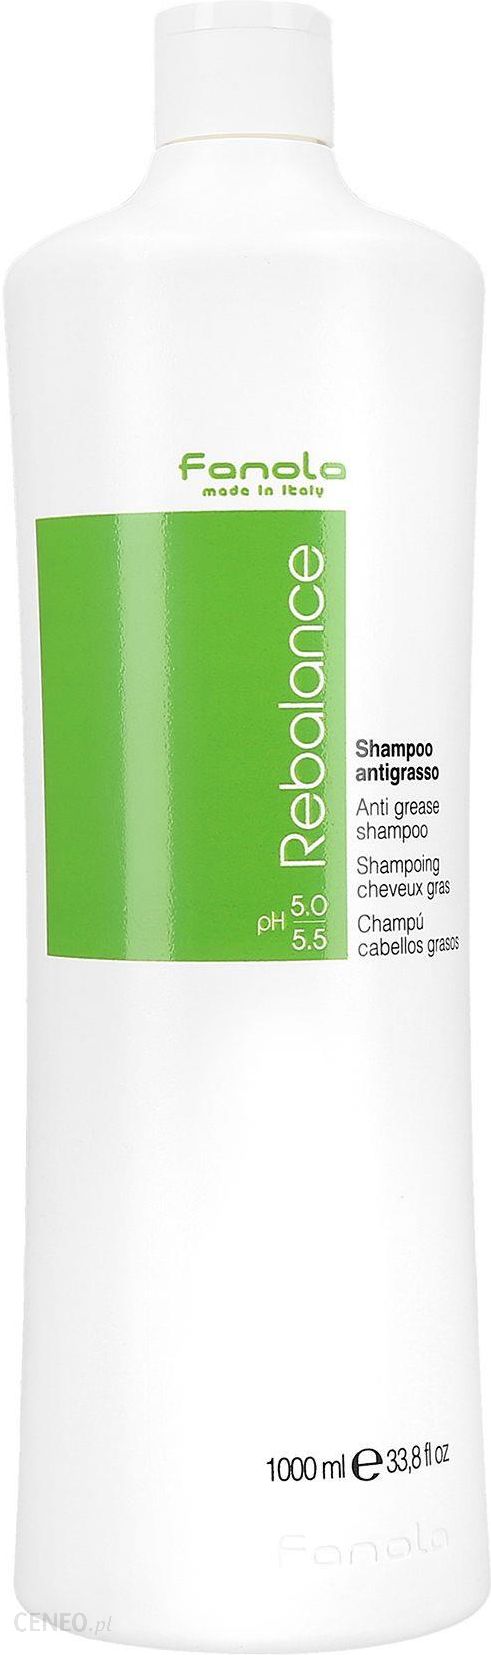 re-balance szampon 1000 ml fanola